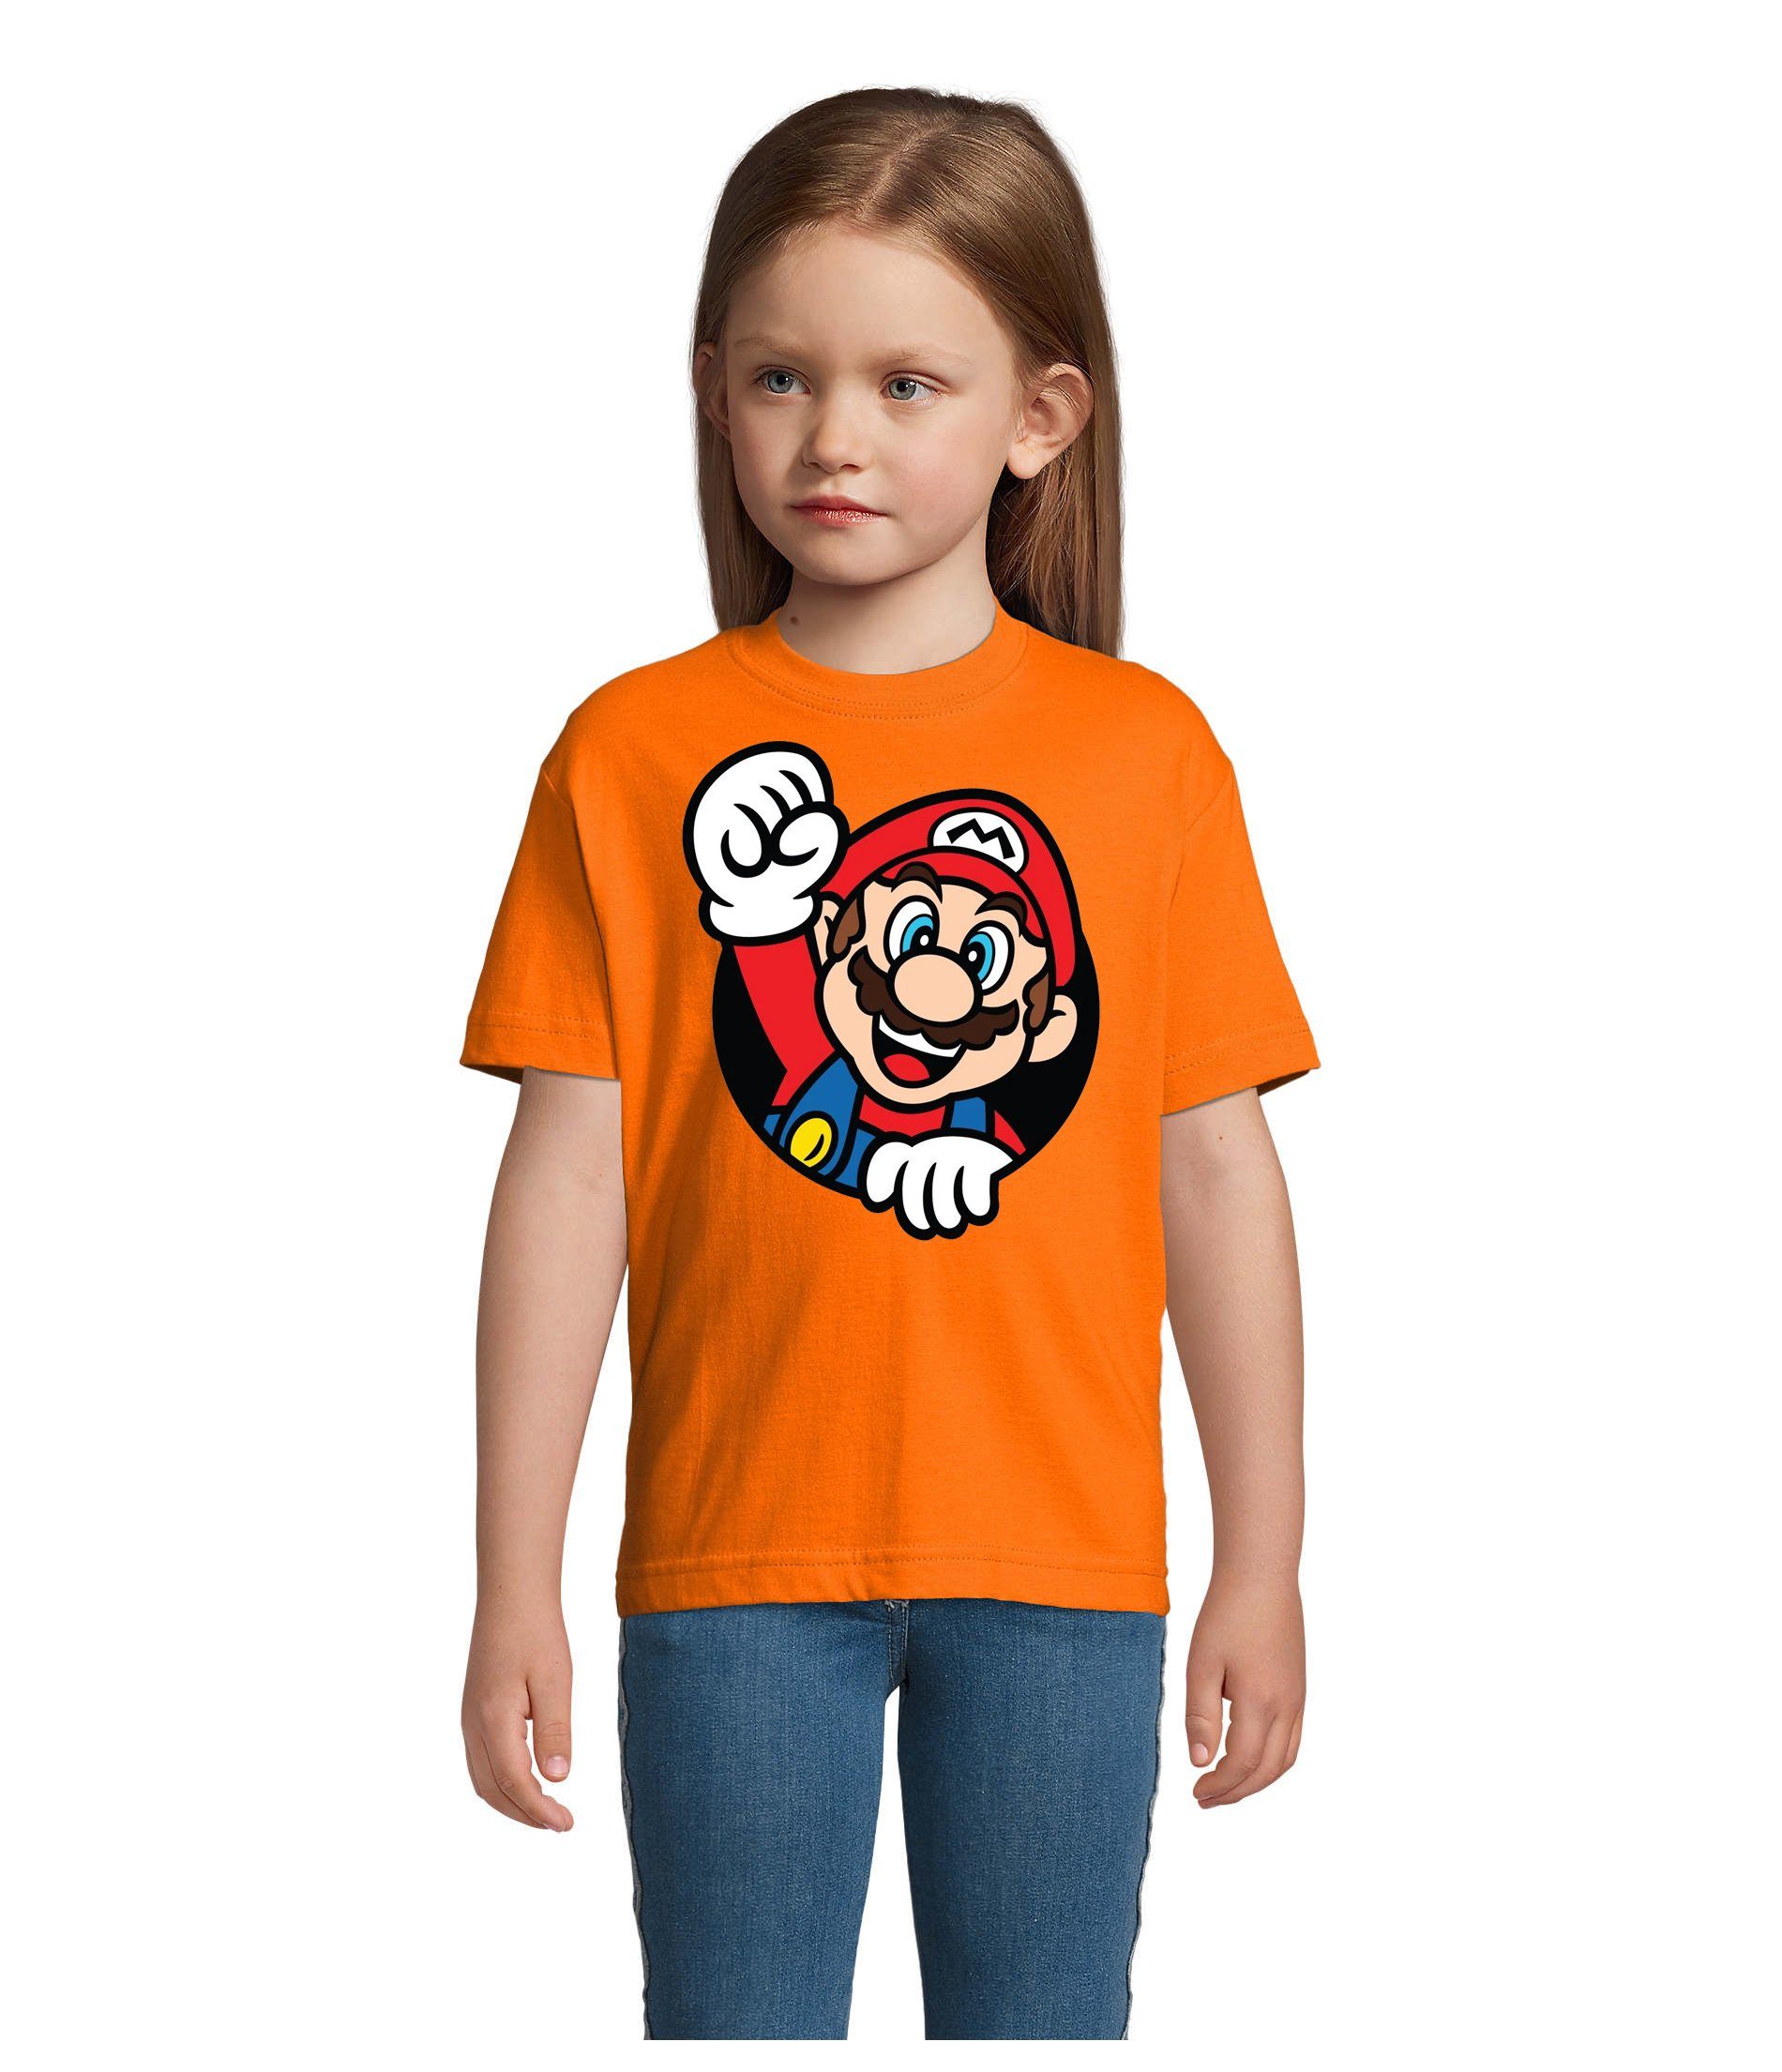 Kinder & Faust Blondie Gaming Nintendo T-Shirt Brownie Konsole Mario Orange Spiel Nerd Konsole Super